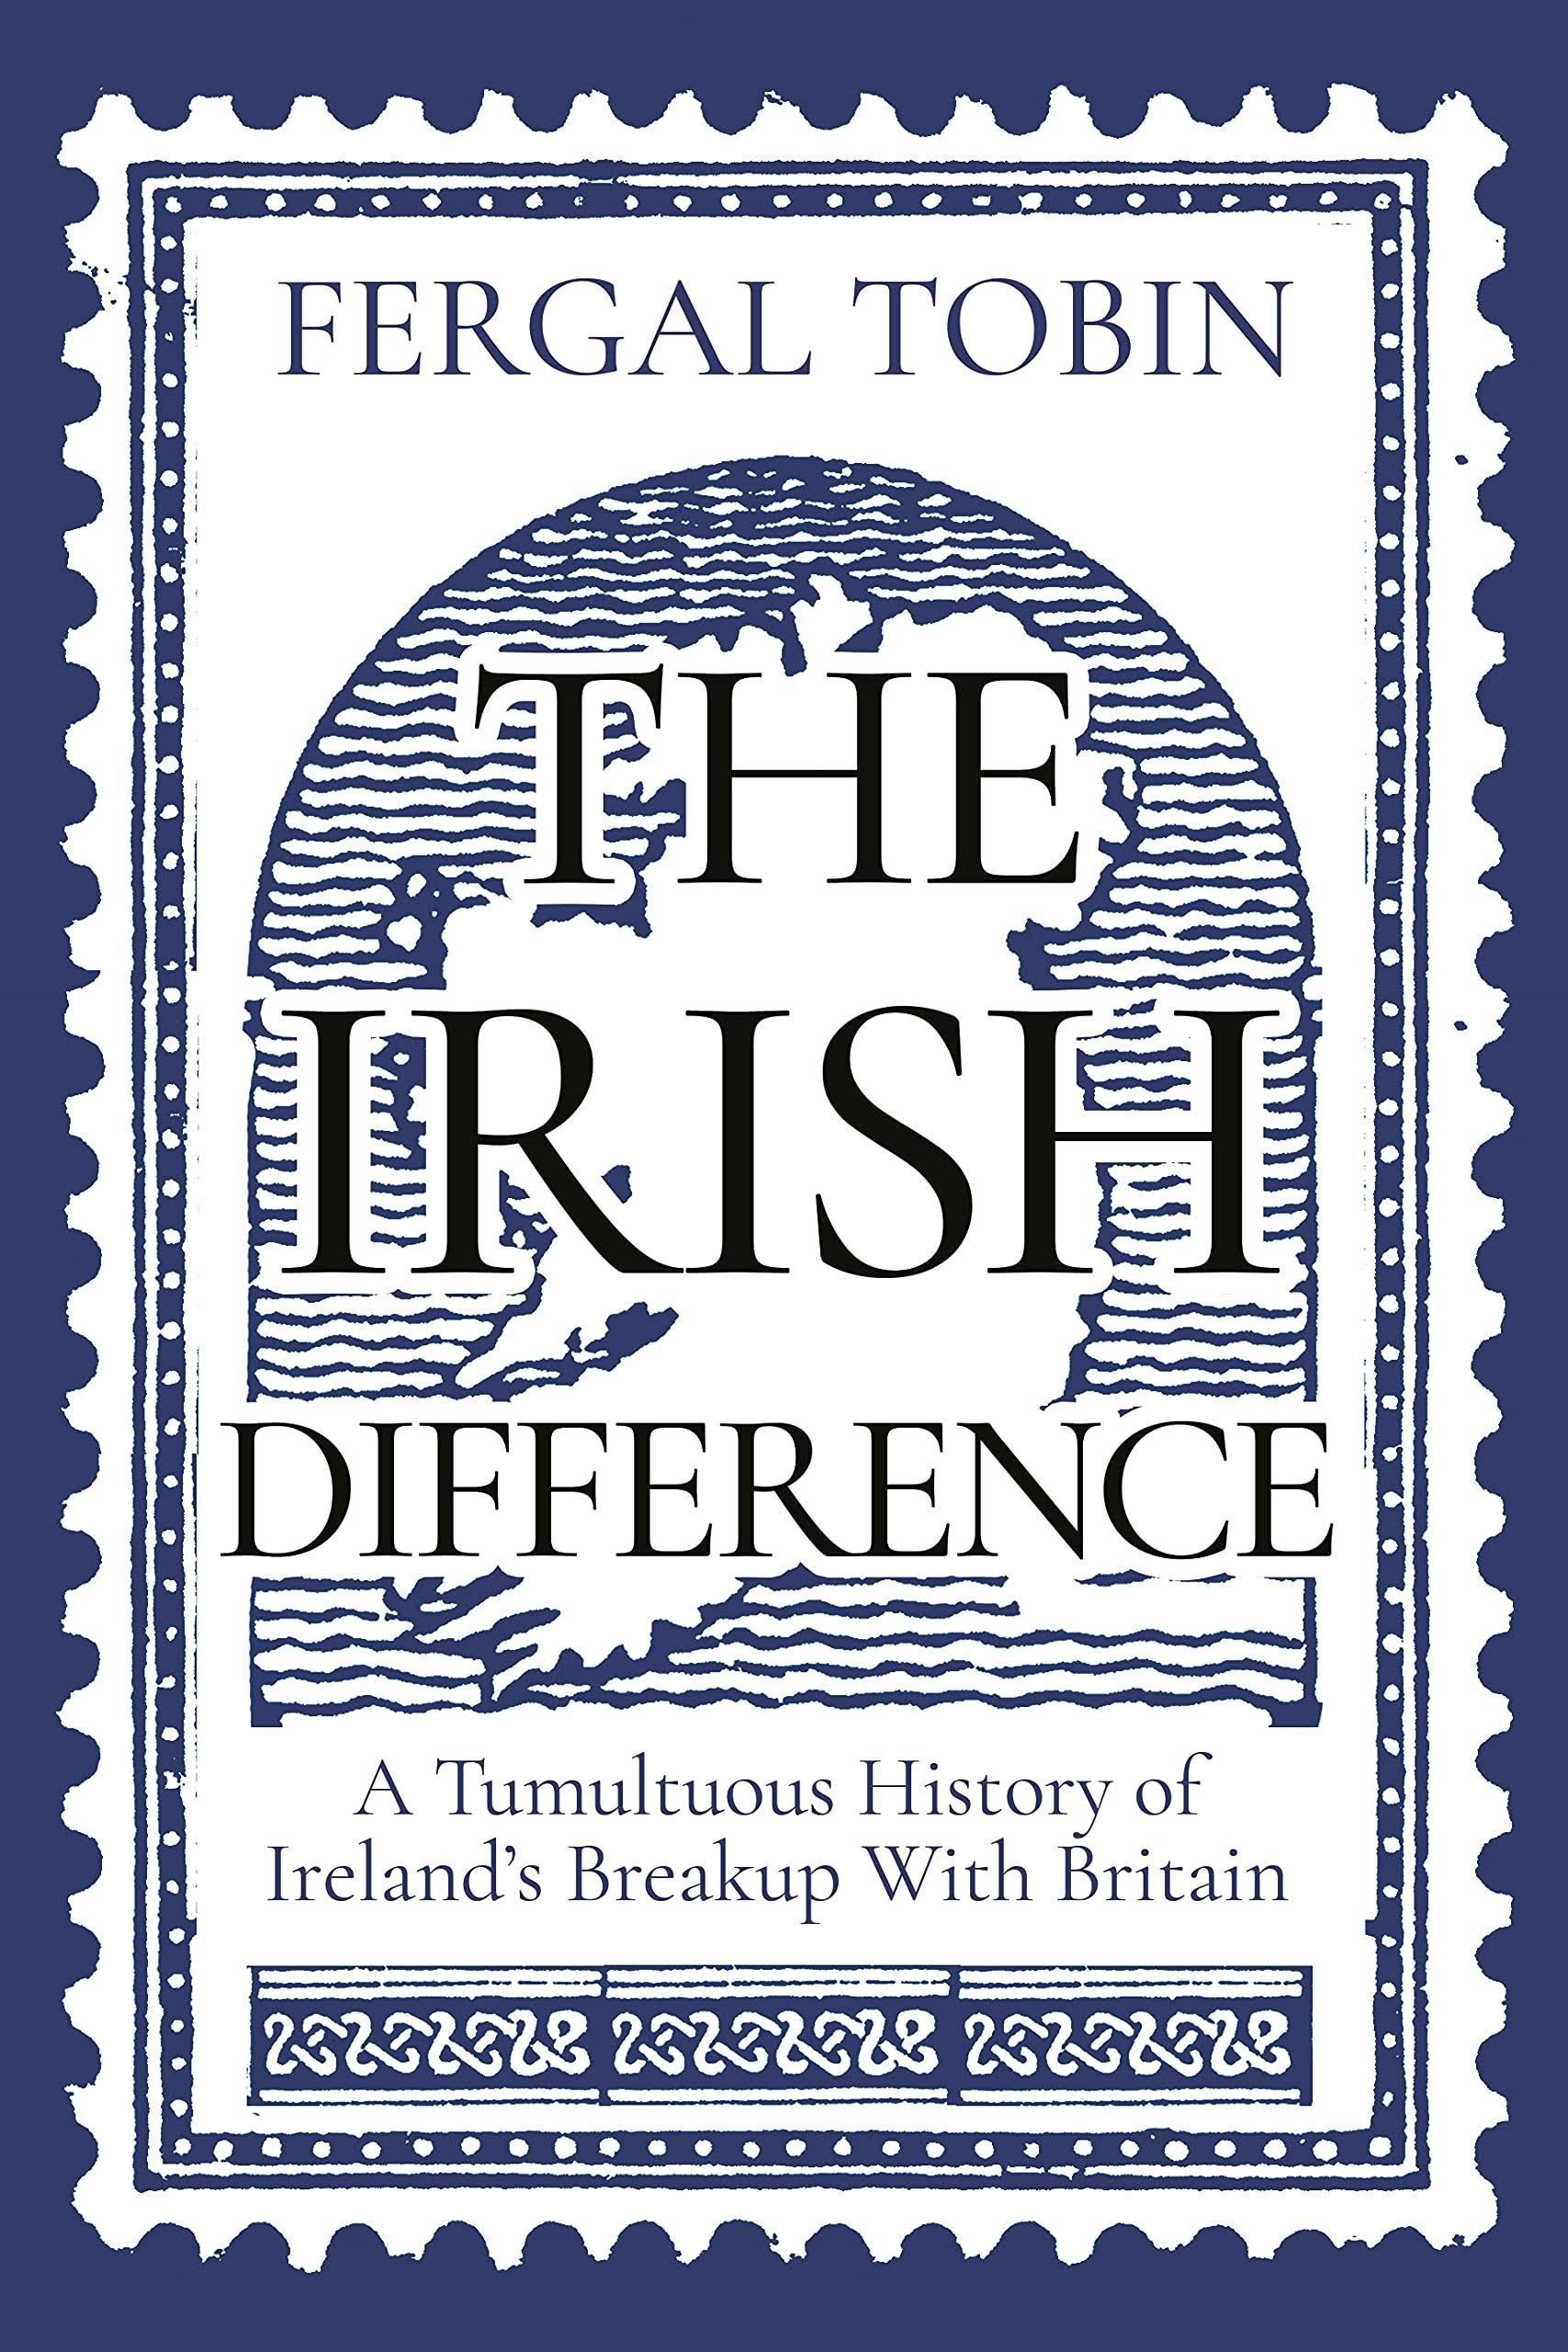 The Irish difference